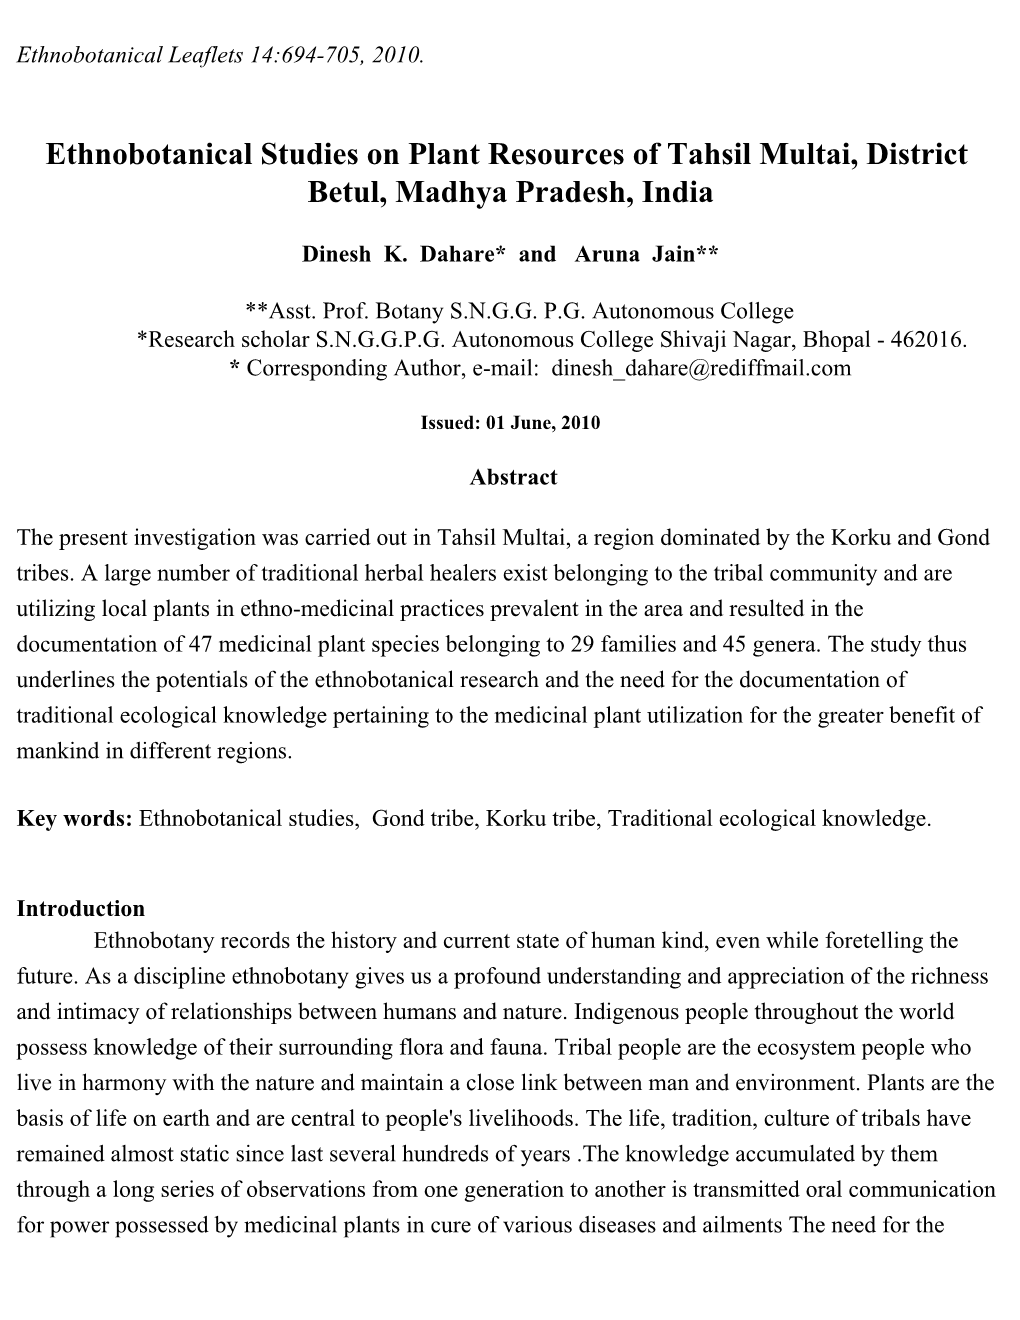 Ethnobotanical Studies on Plant Resources of Tahsil Multai, District Betul, Madhya Pradesh, India